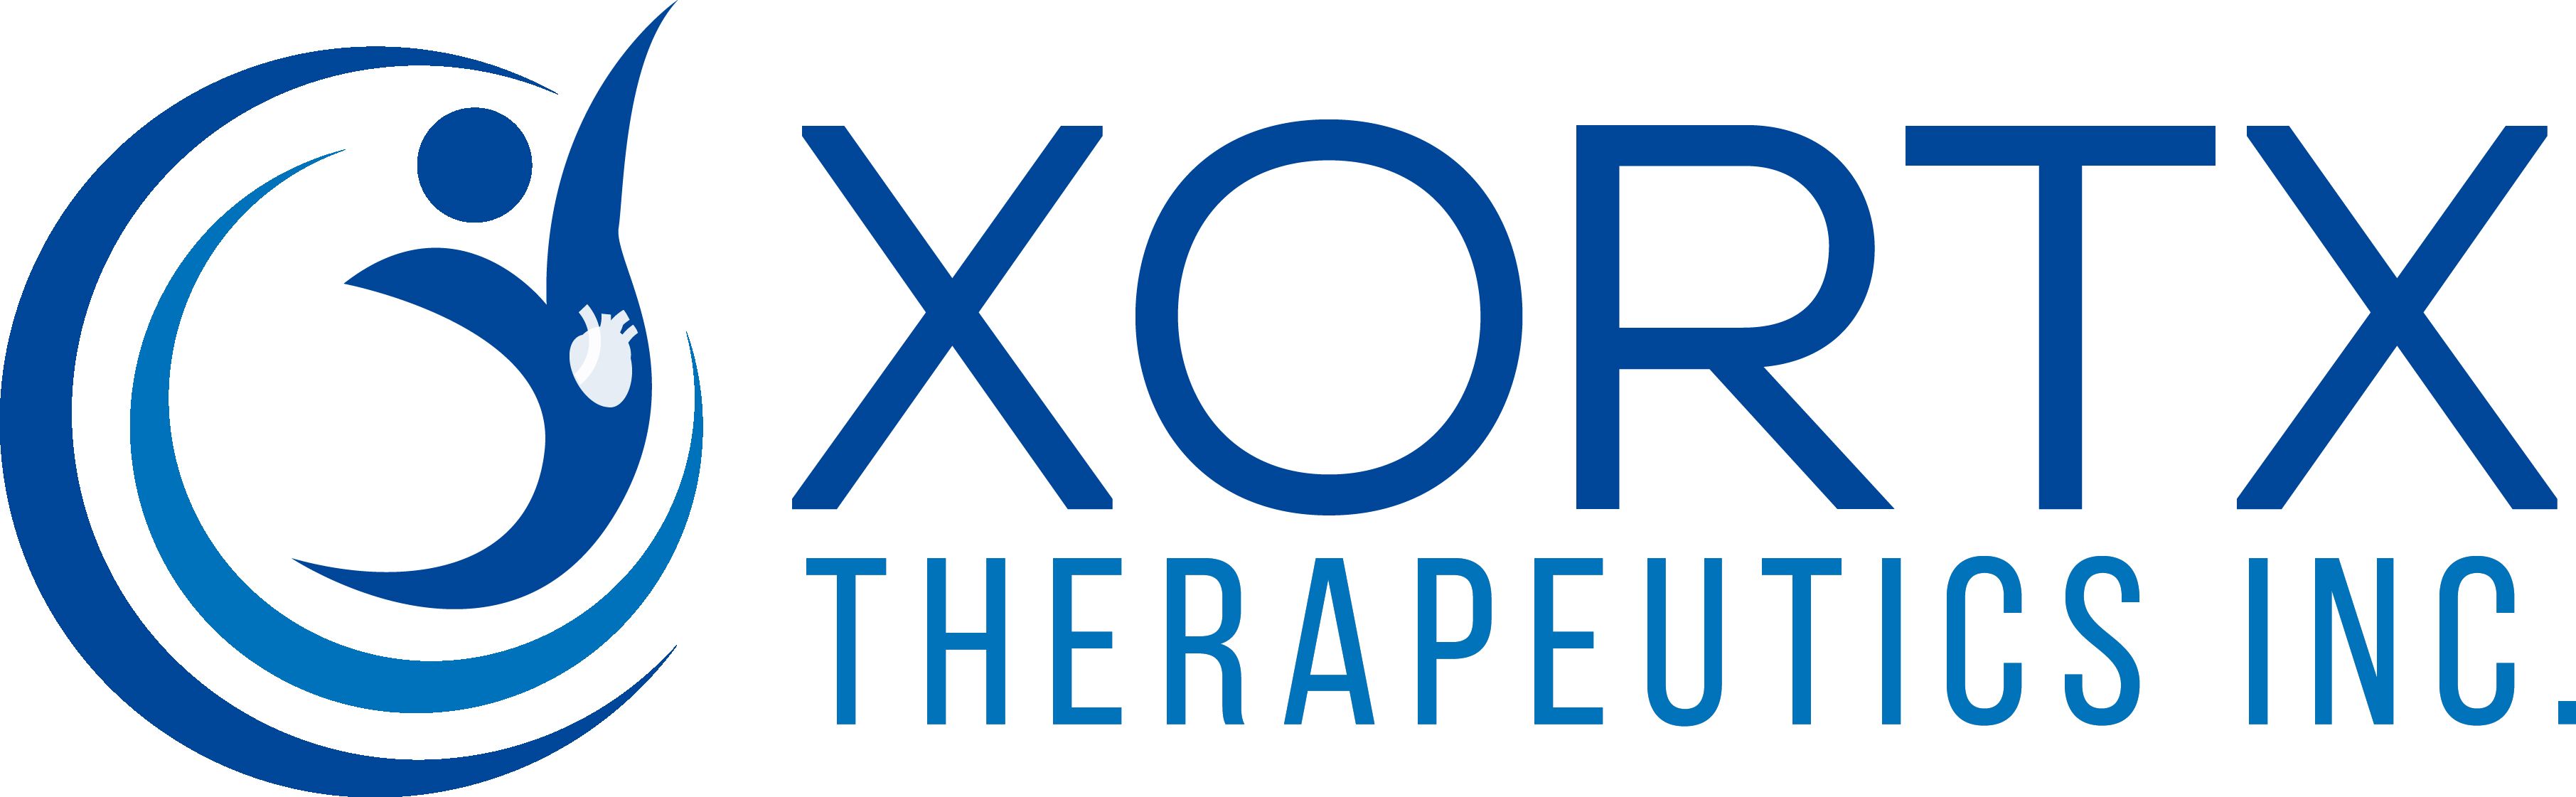 XORTX_Therapeutics_Inc.jpg